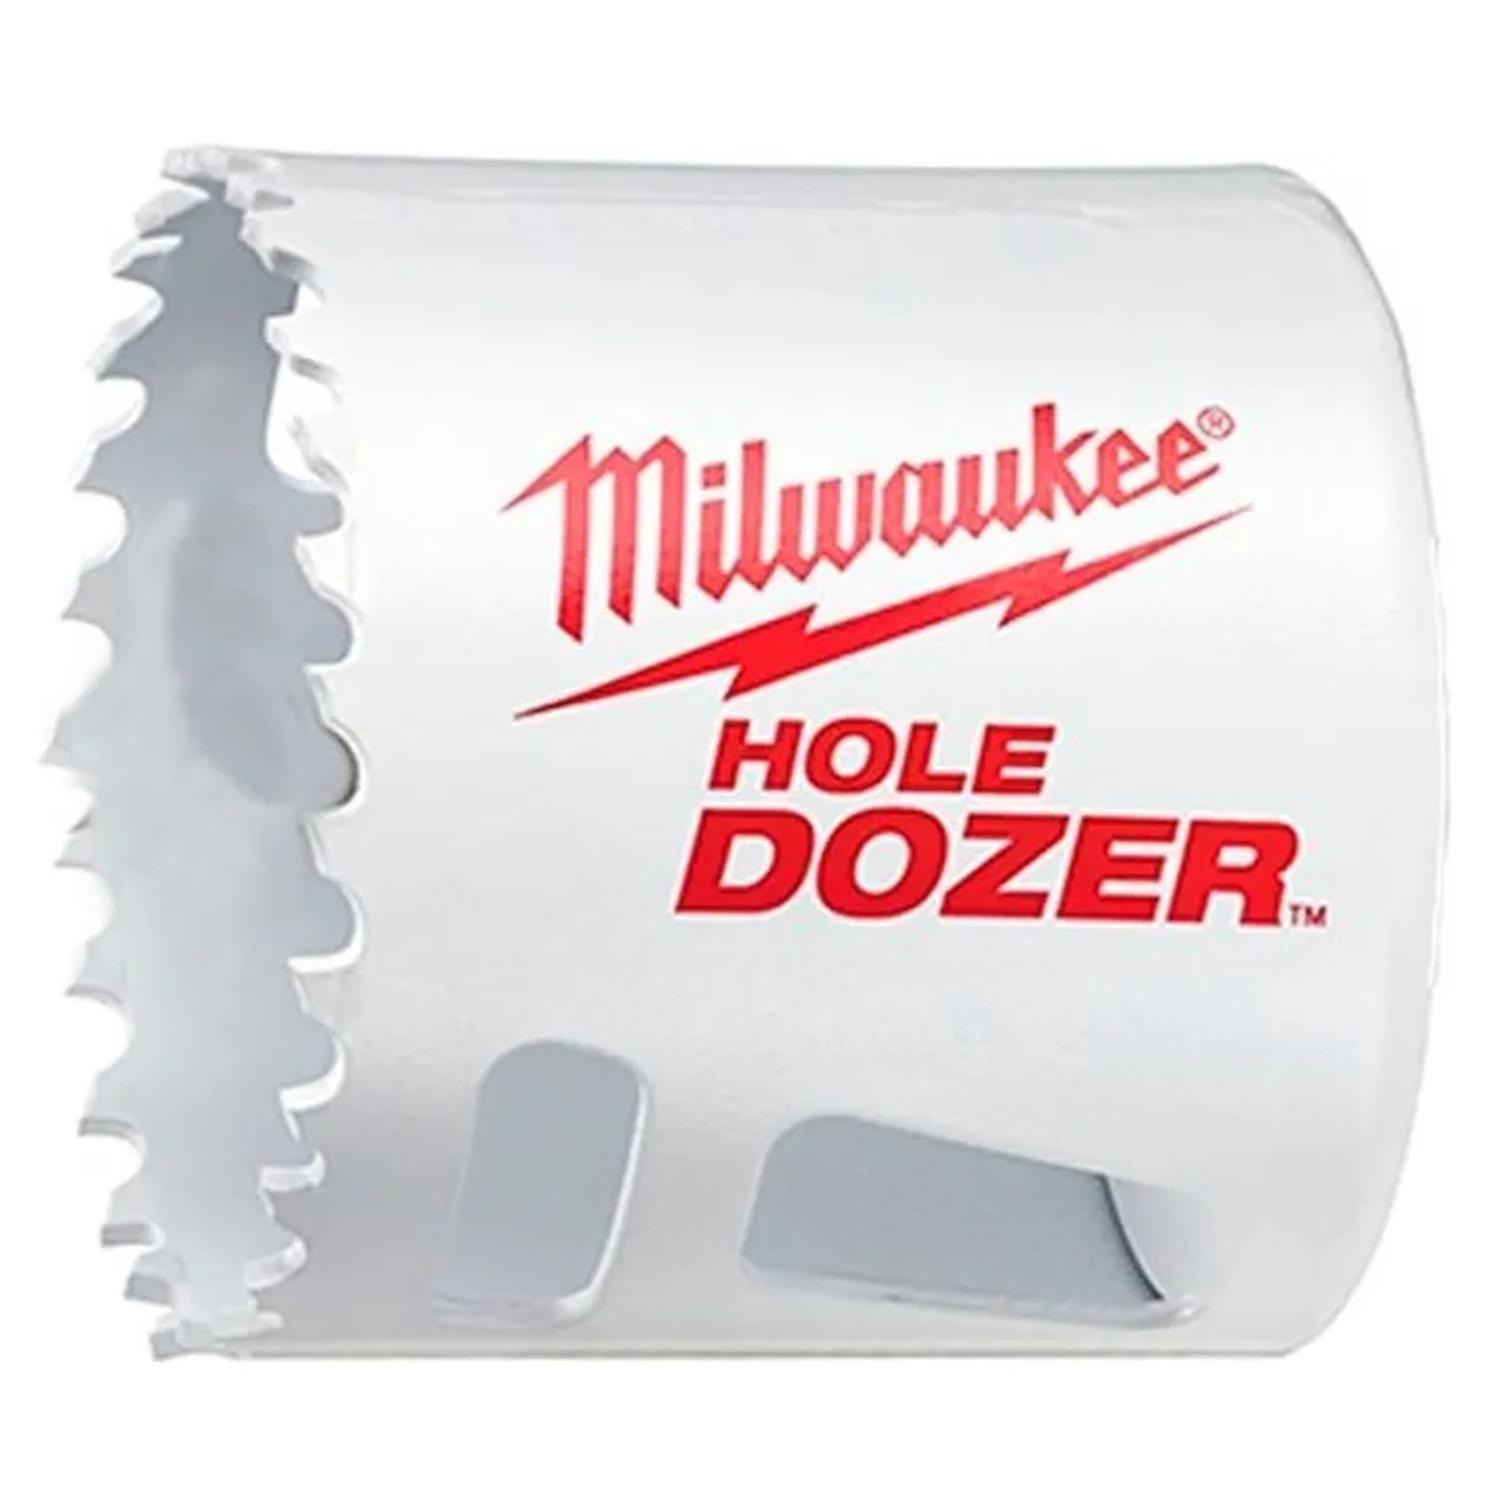 Broca Sierra Endurecida Hole Dozer™ 2-1/4" Milwaukee 49-56-0132 Milwaukee en Pachuca